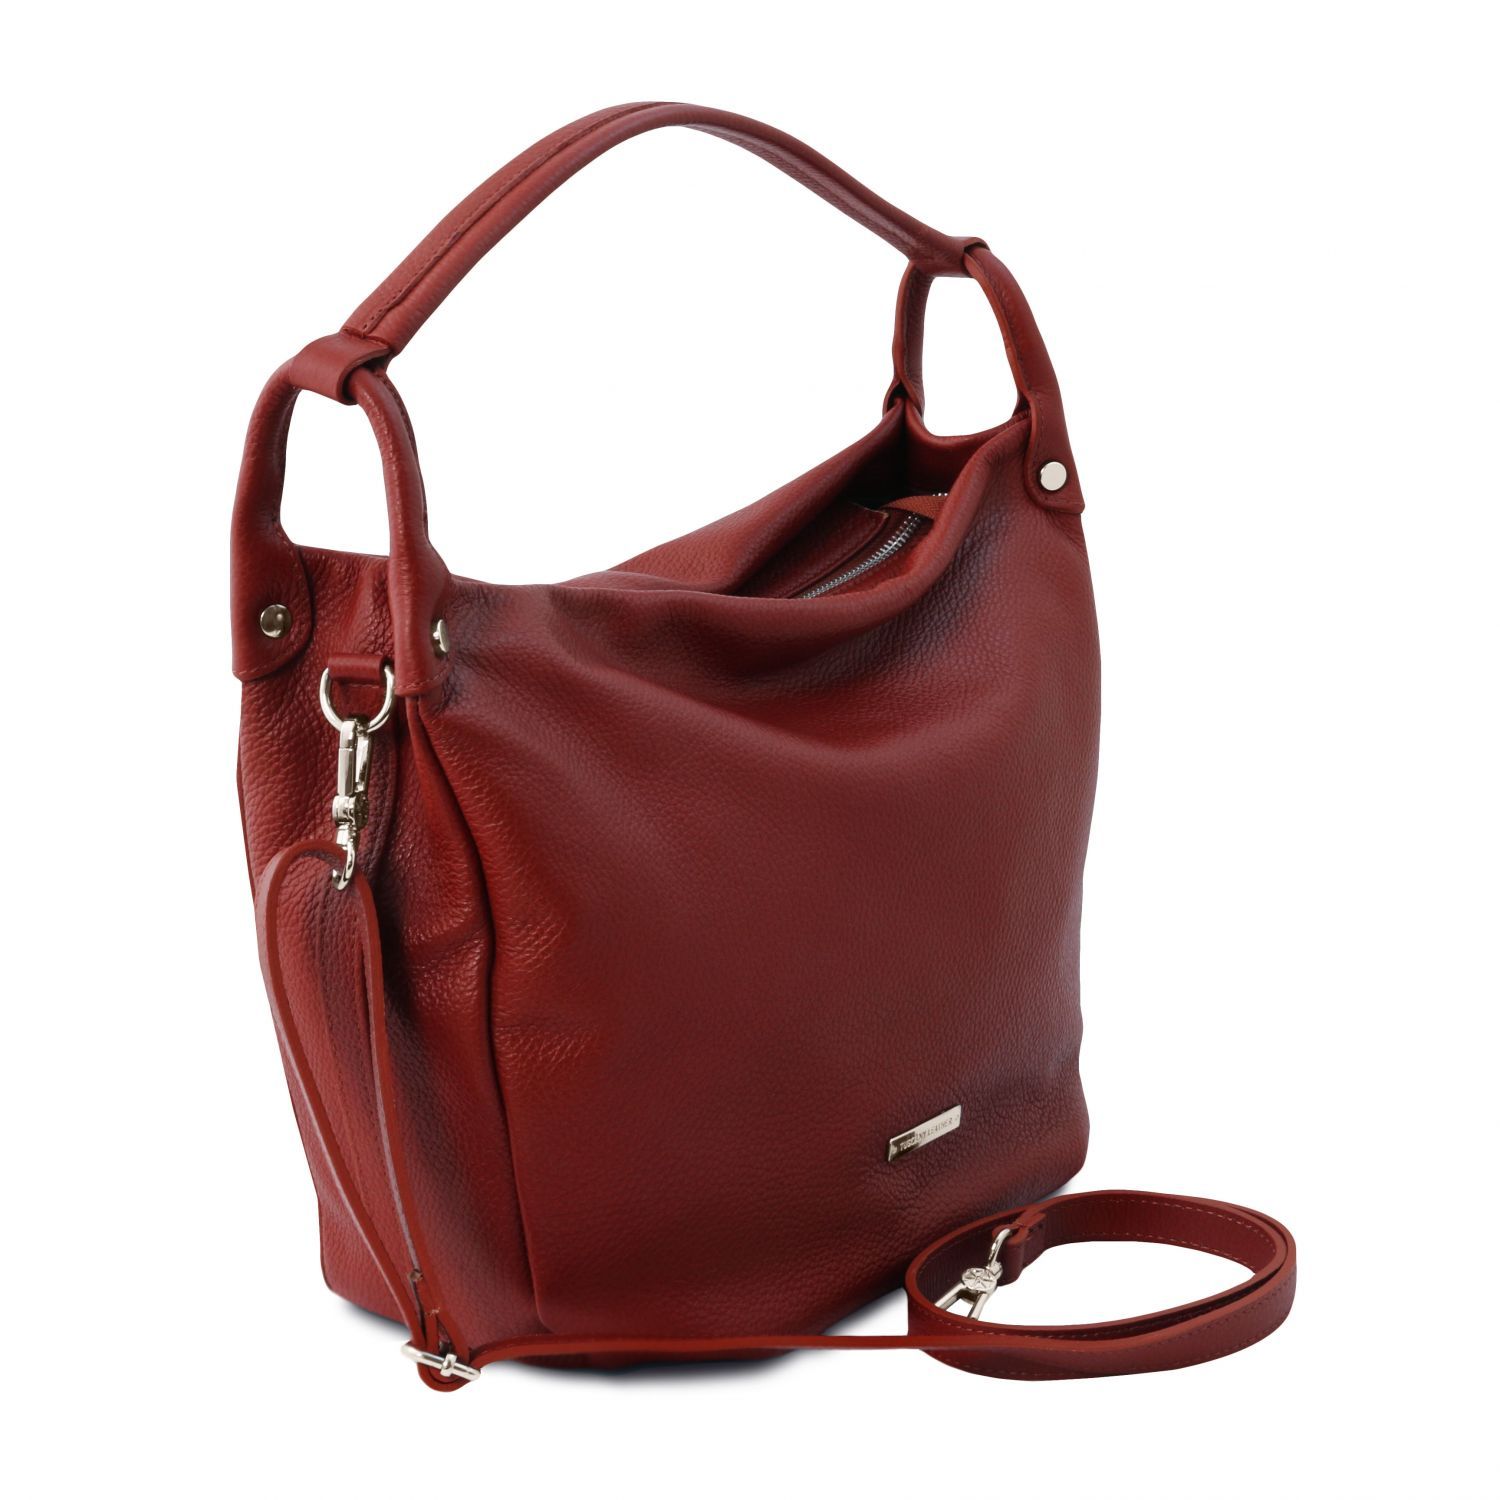 TL Bag Soft Leather Hobo bag Red TL141855